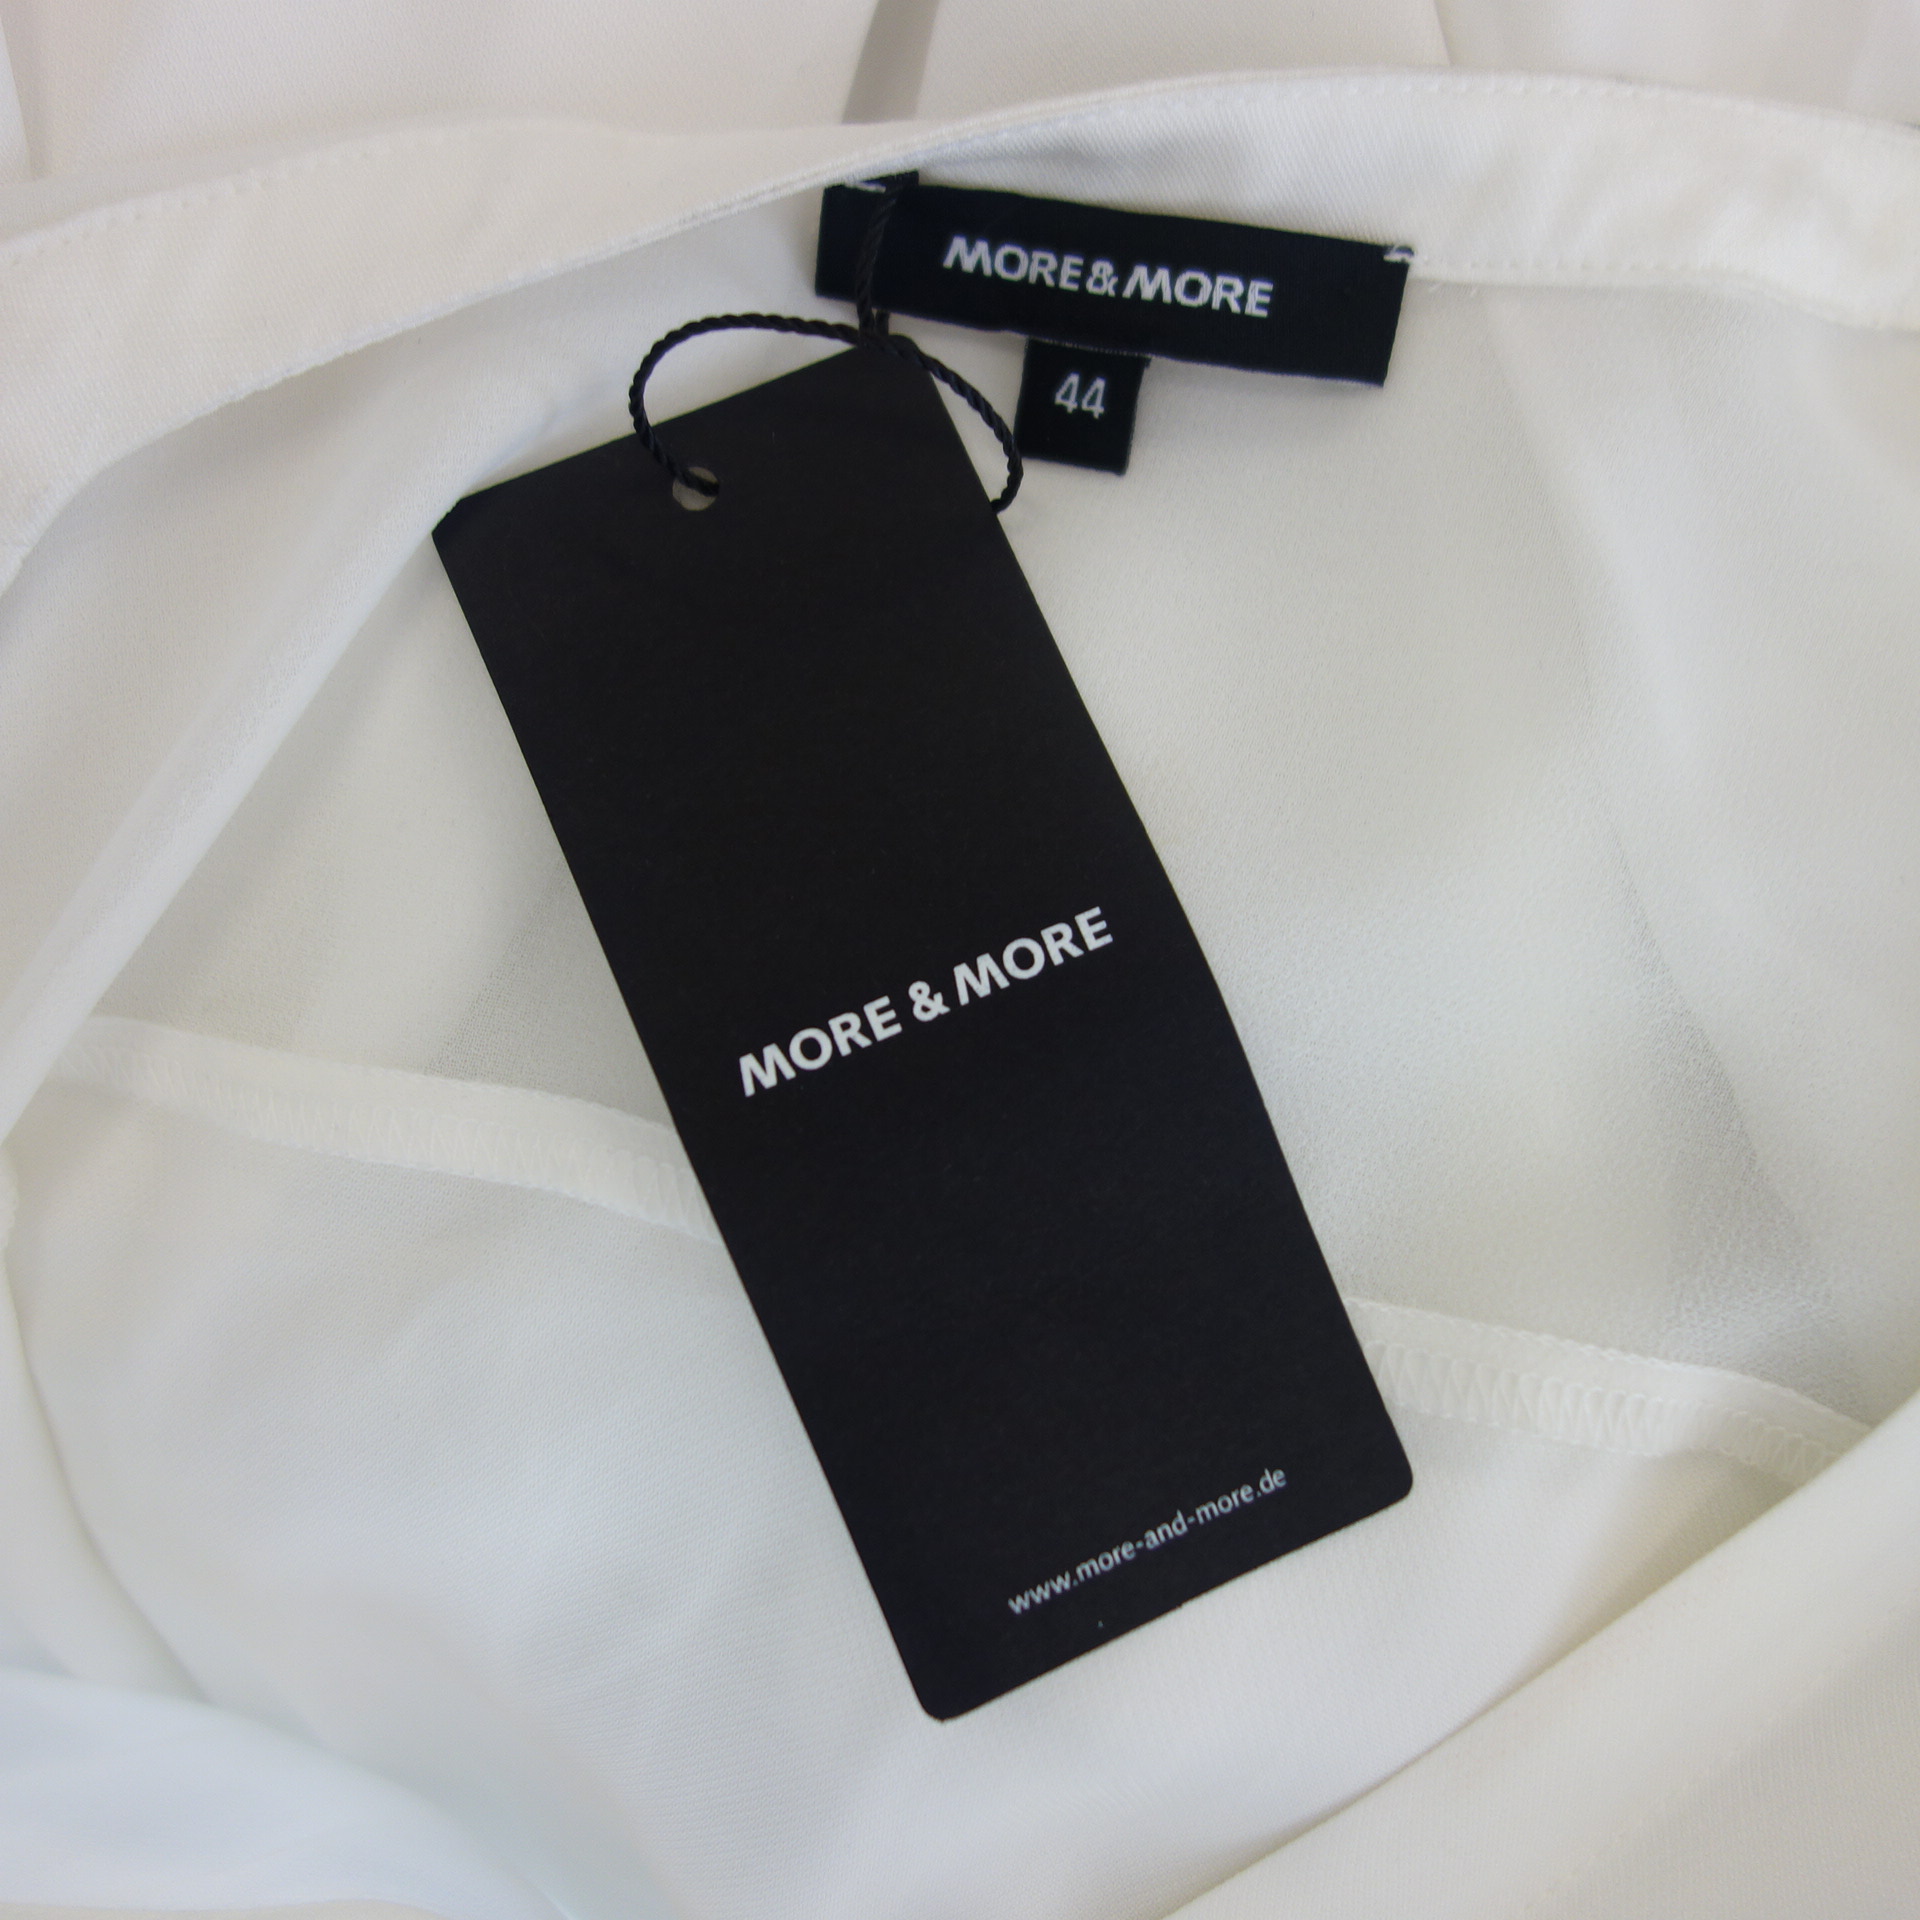 MORE & MORE Damen Tunika Shirt Bluse Oberteil Weiß Transparent 100% Viskose Gr 44